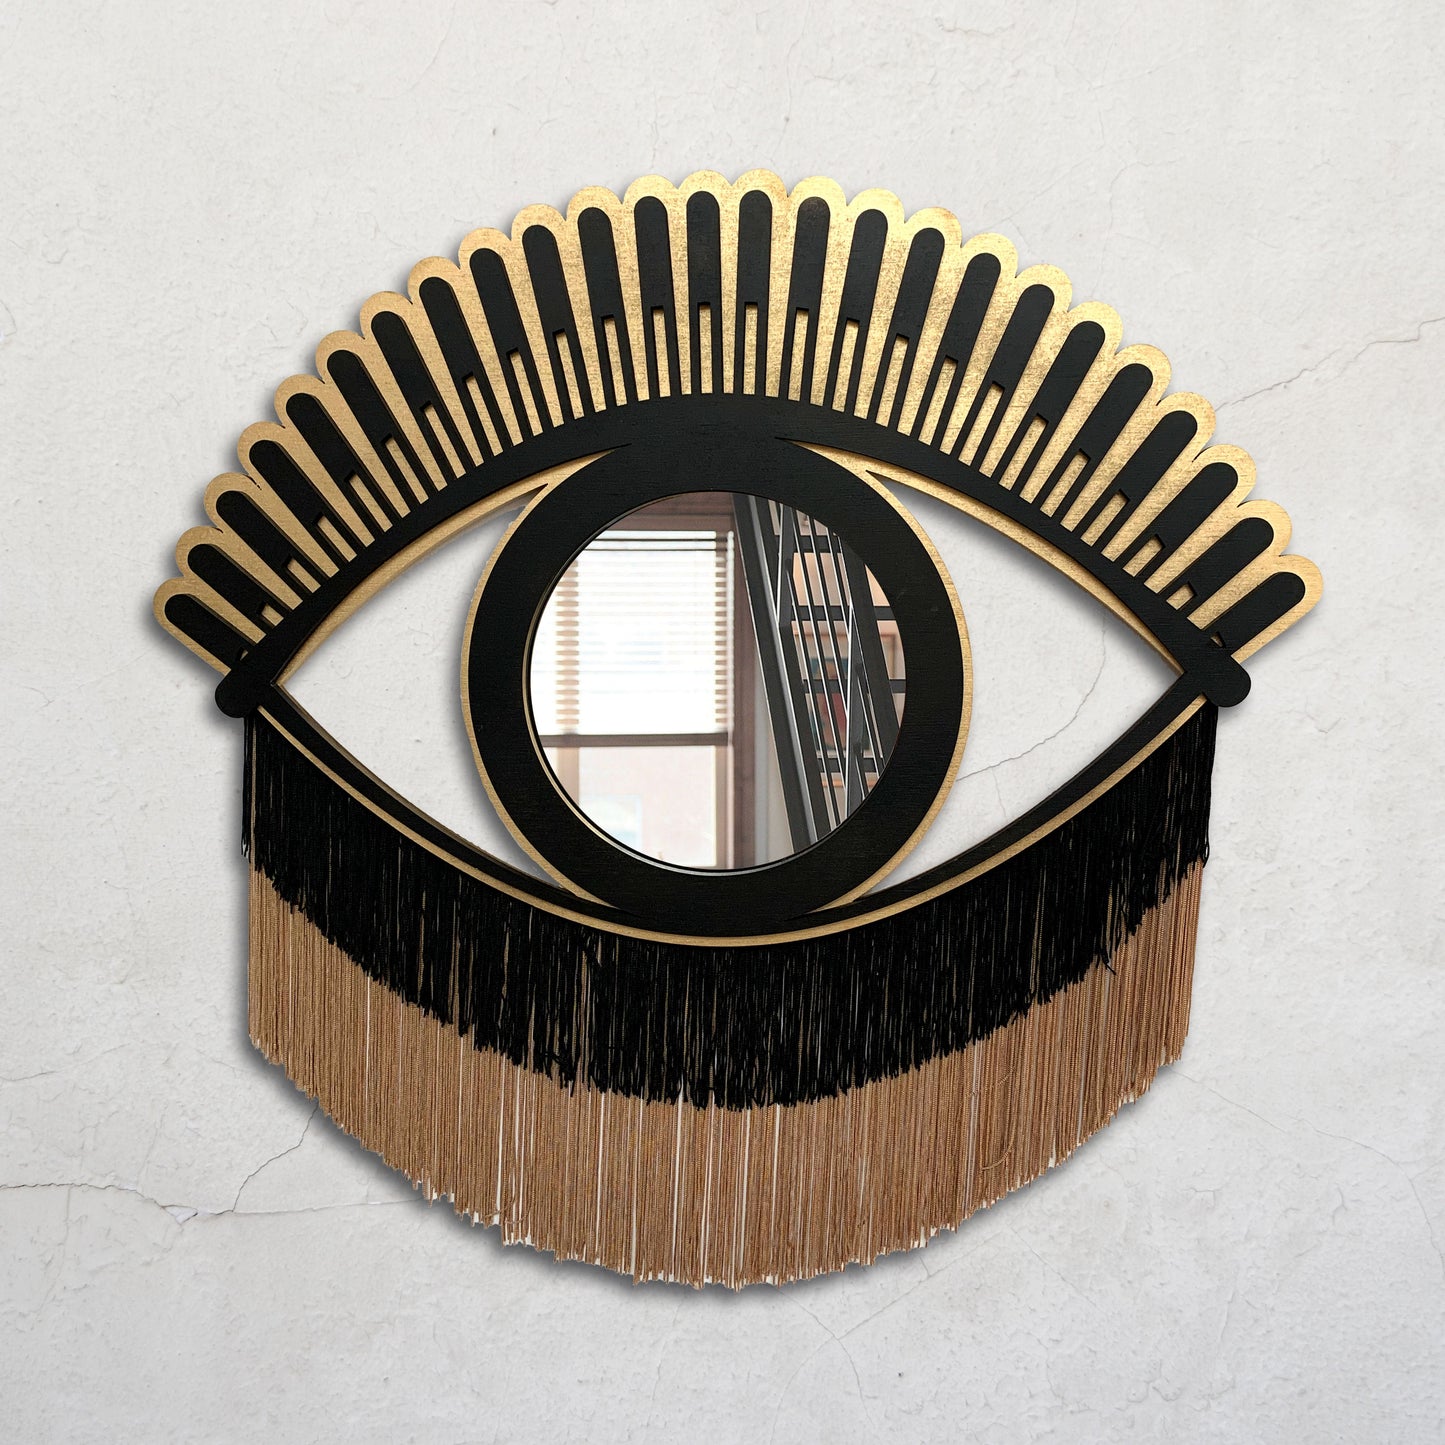 Perfect beauty - The mirror eye